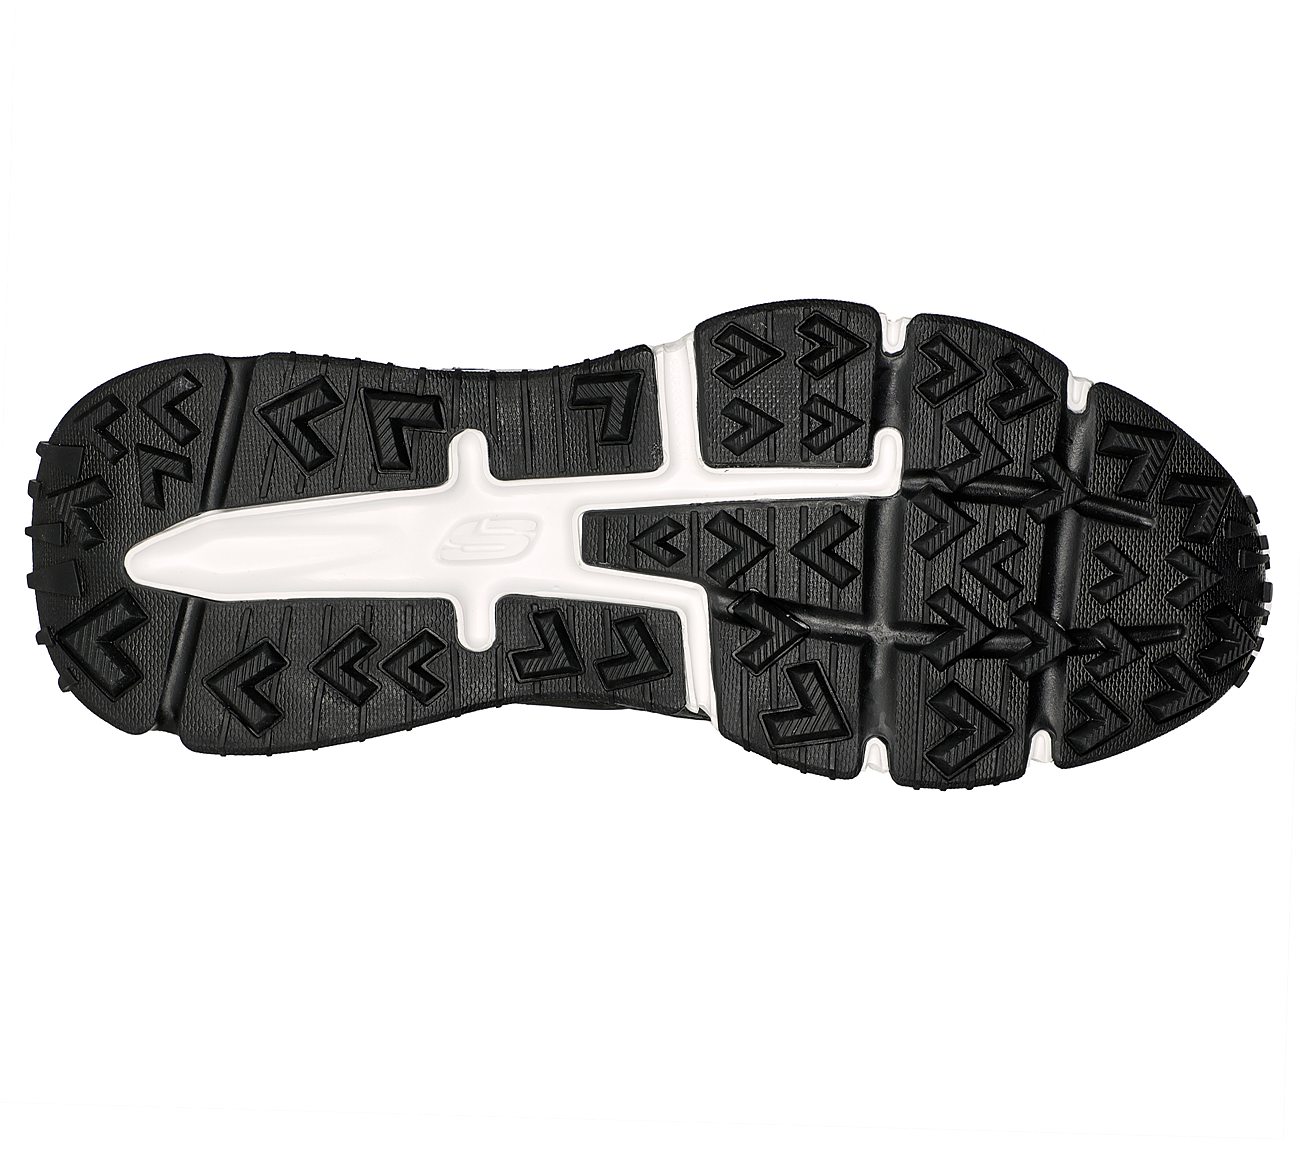 SKECH-AIR ENVOY, BLACK/WHITE Footwear Bottom View